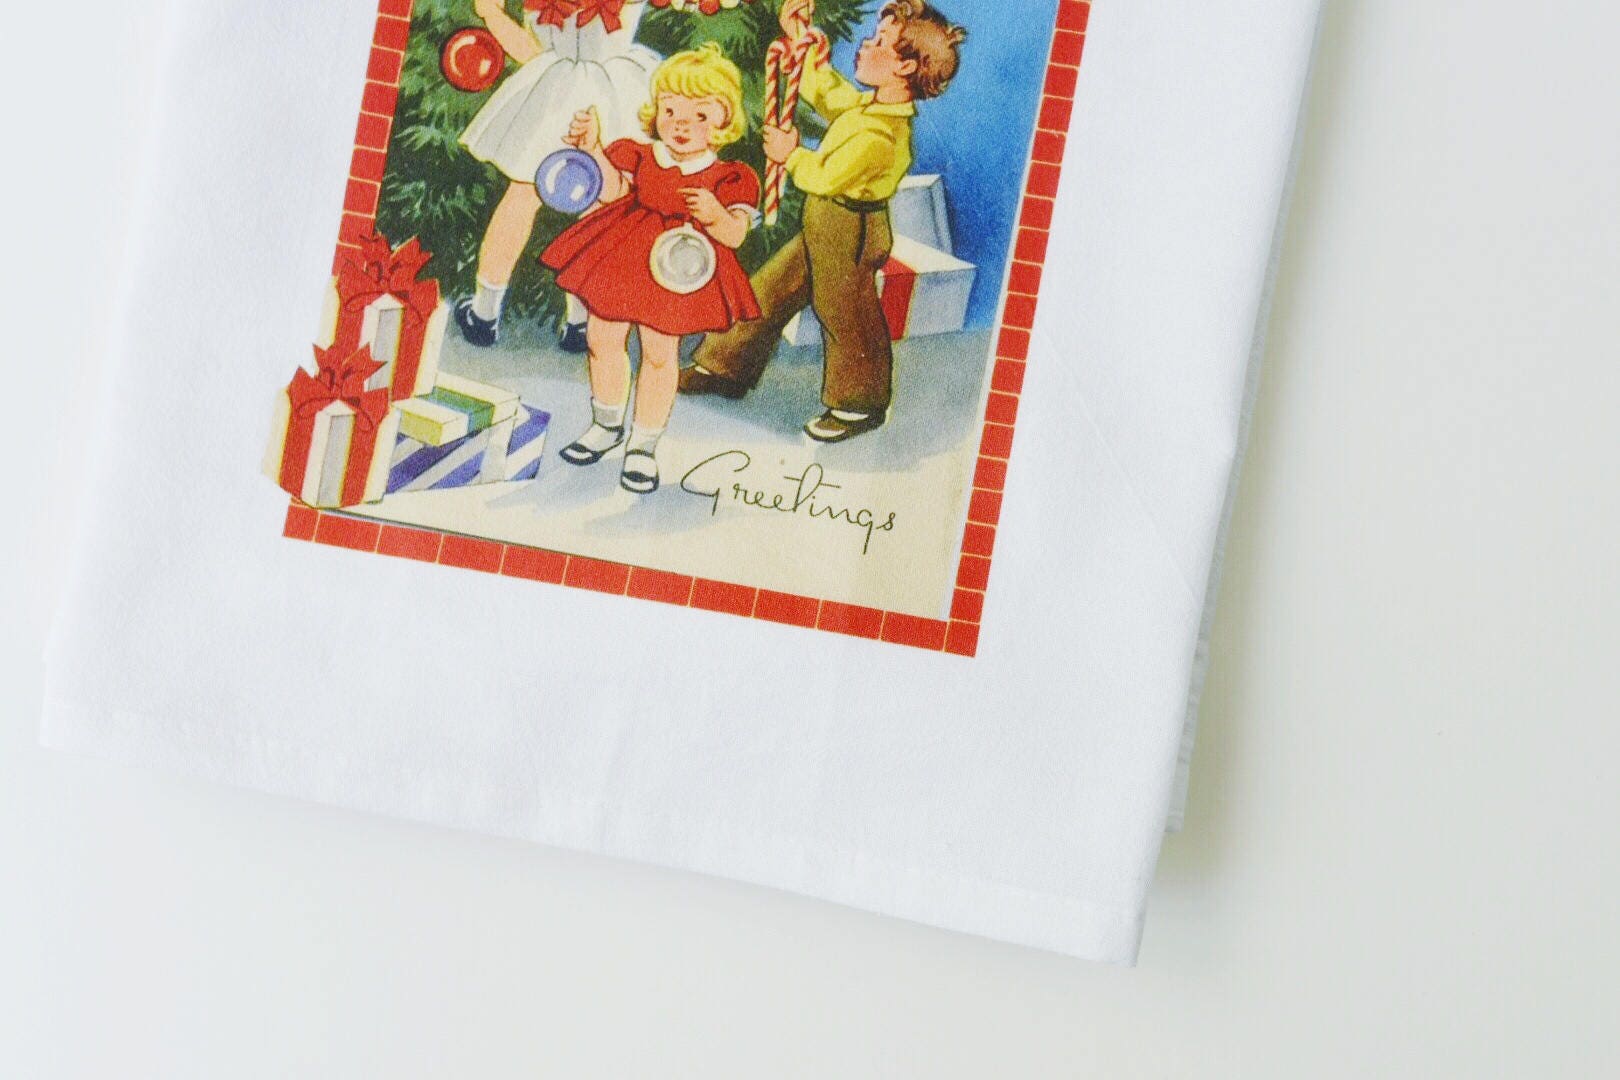 Christmas Tree Flour Sack Towel - Centered Print –